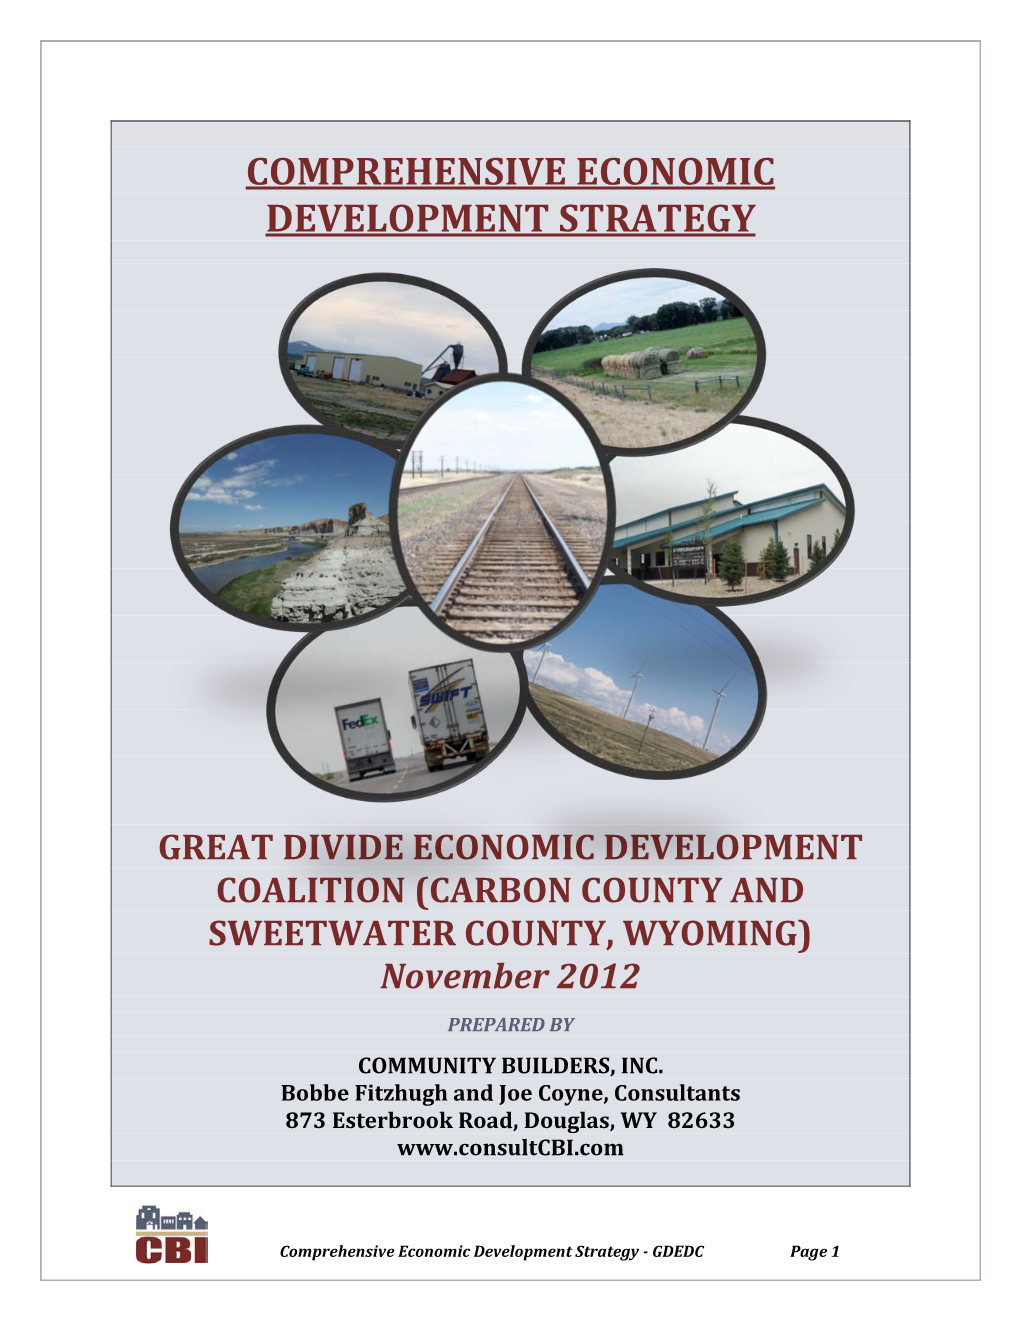 Great Divide Comprehensive Economic Development Strategy